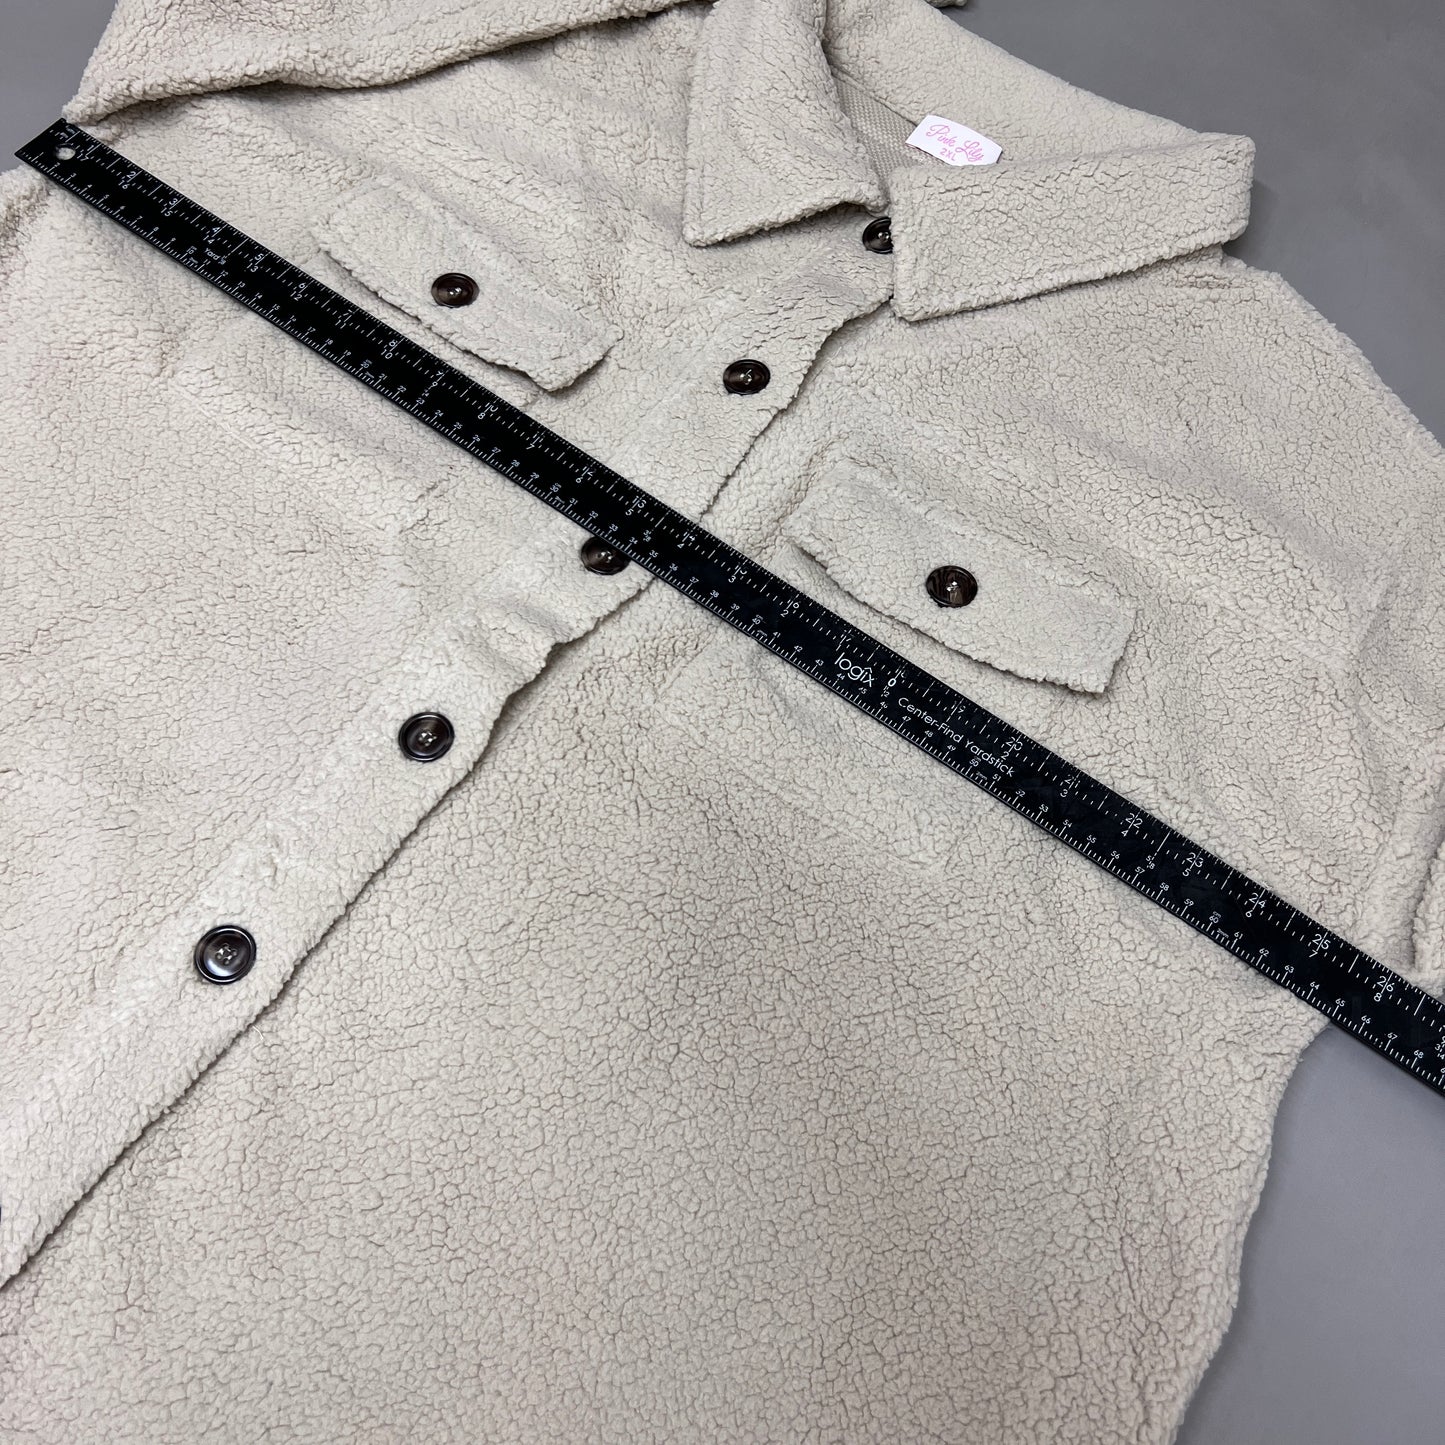 PINK LILY Fleece Button-up Jacket Women's Sz 2XL Beige PL177 (New)